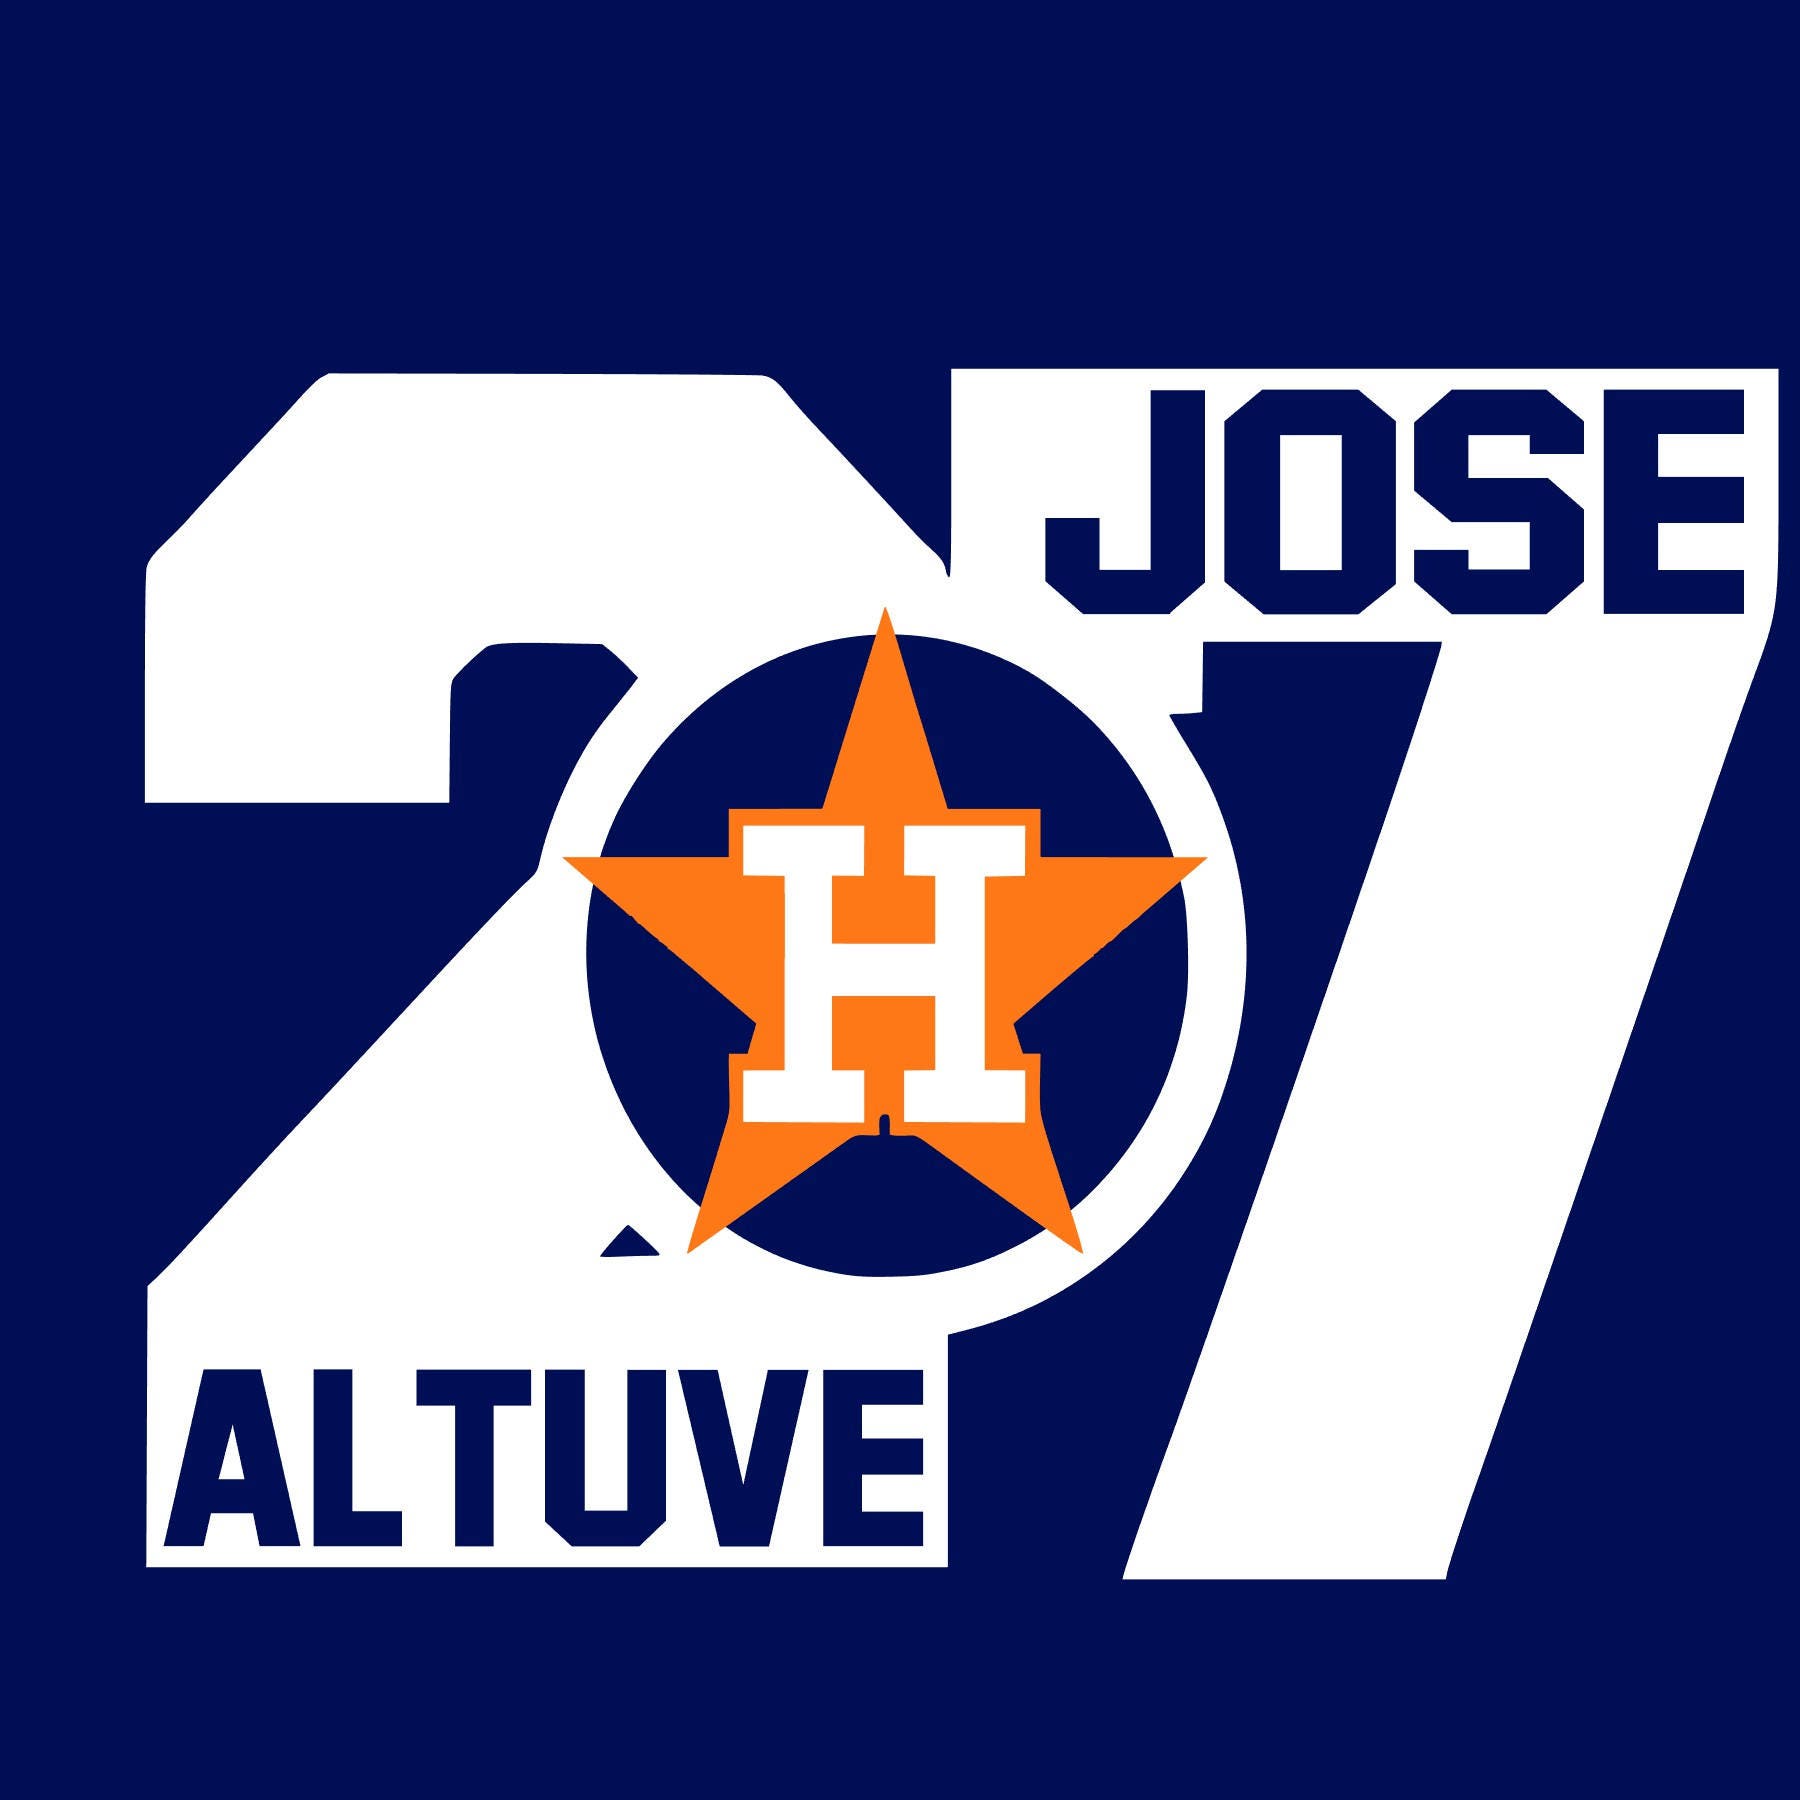 Download Digi-tizers Jose Altuve 27 Version 2 Houston Astros SVG